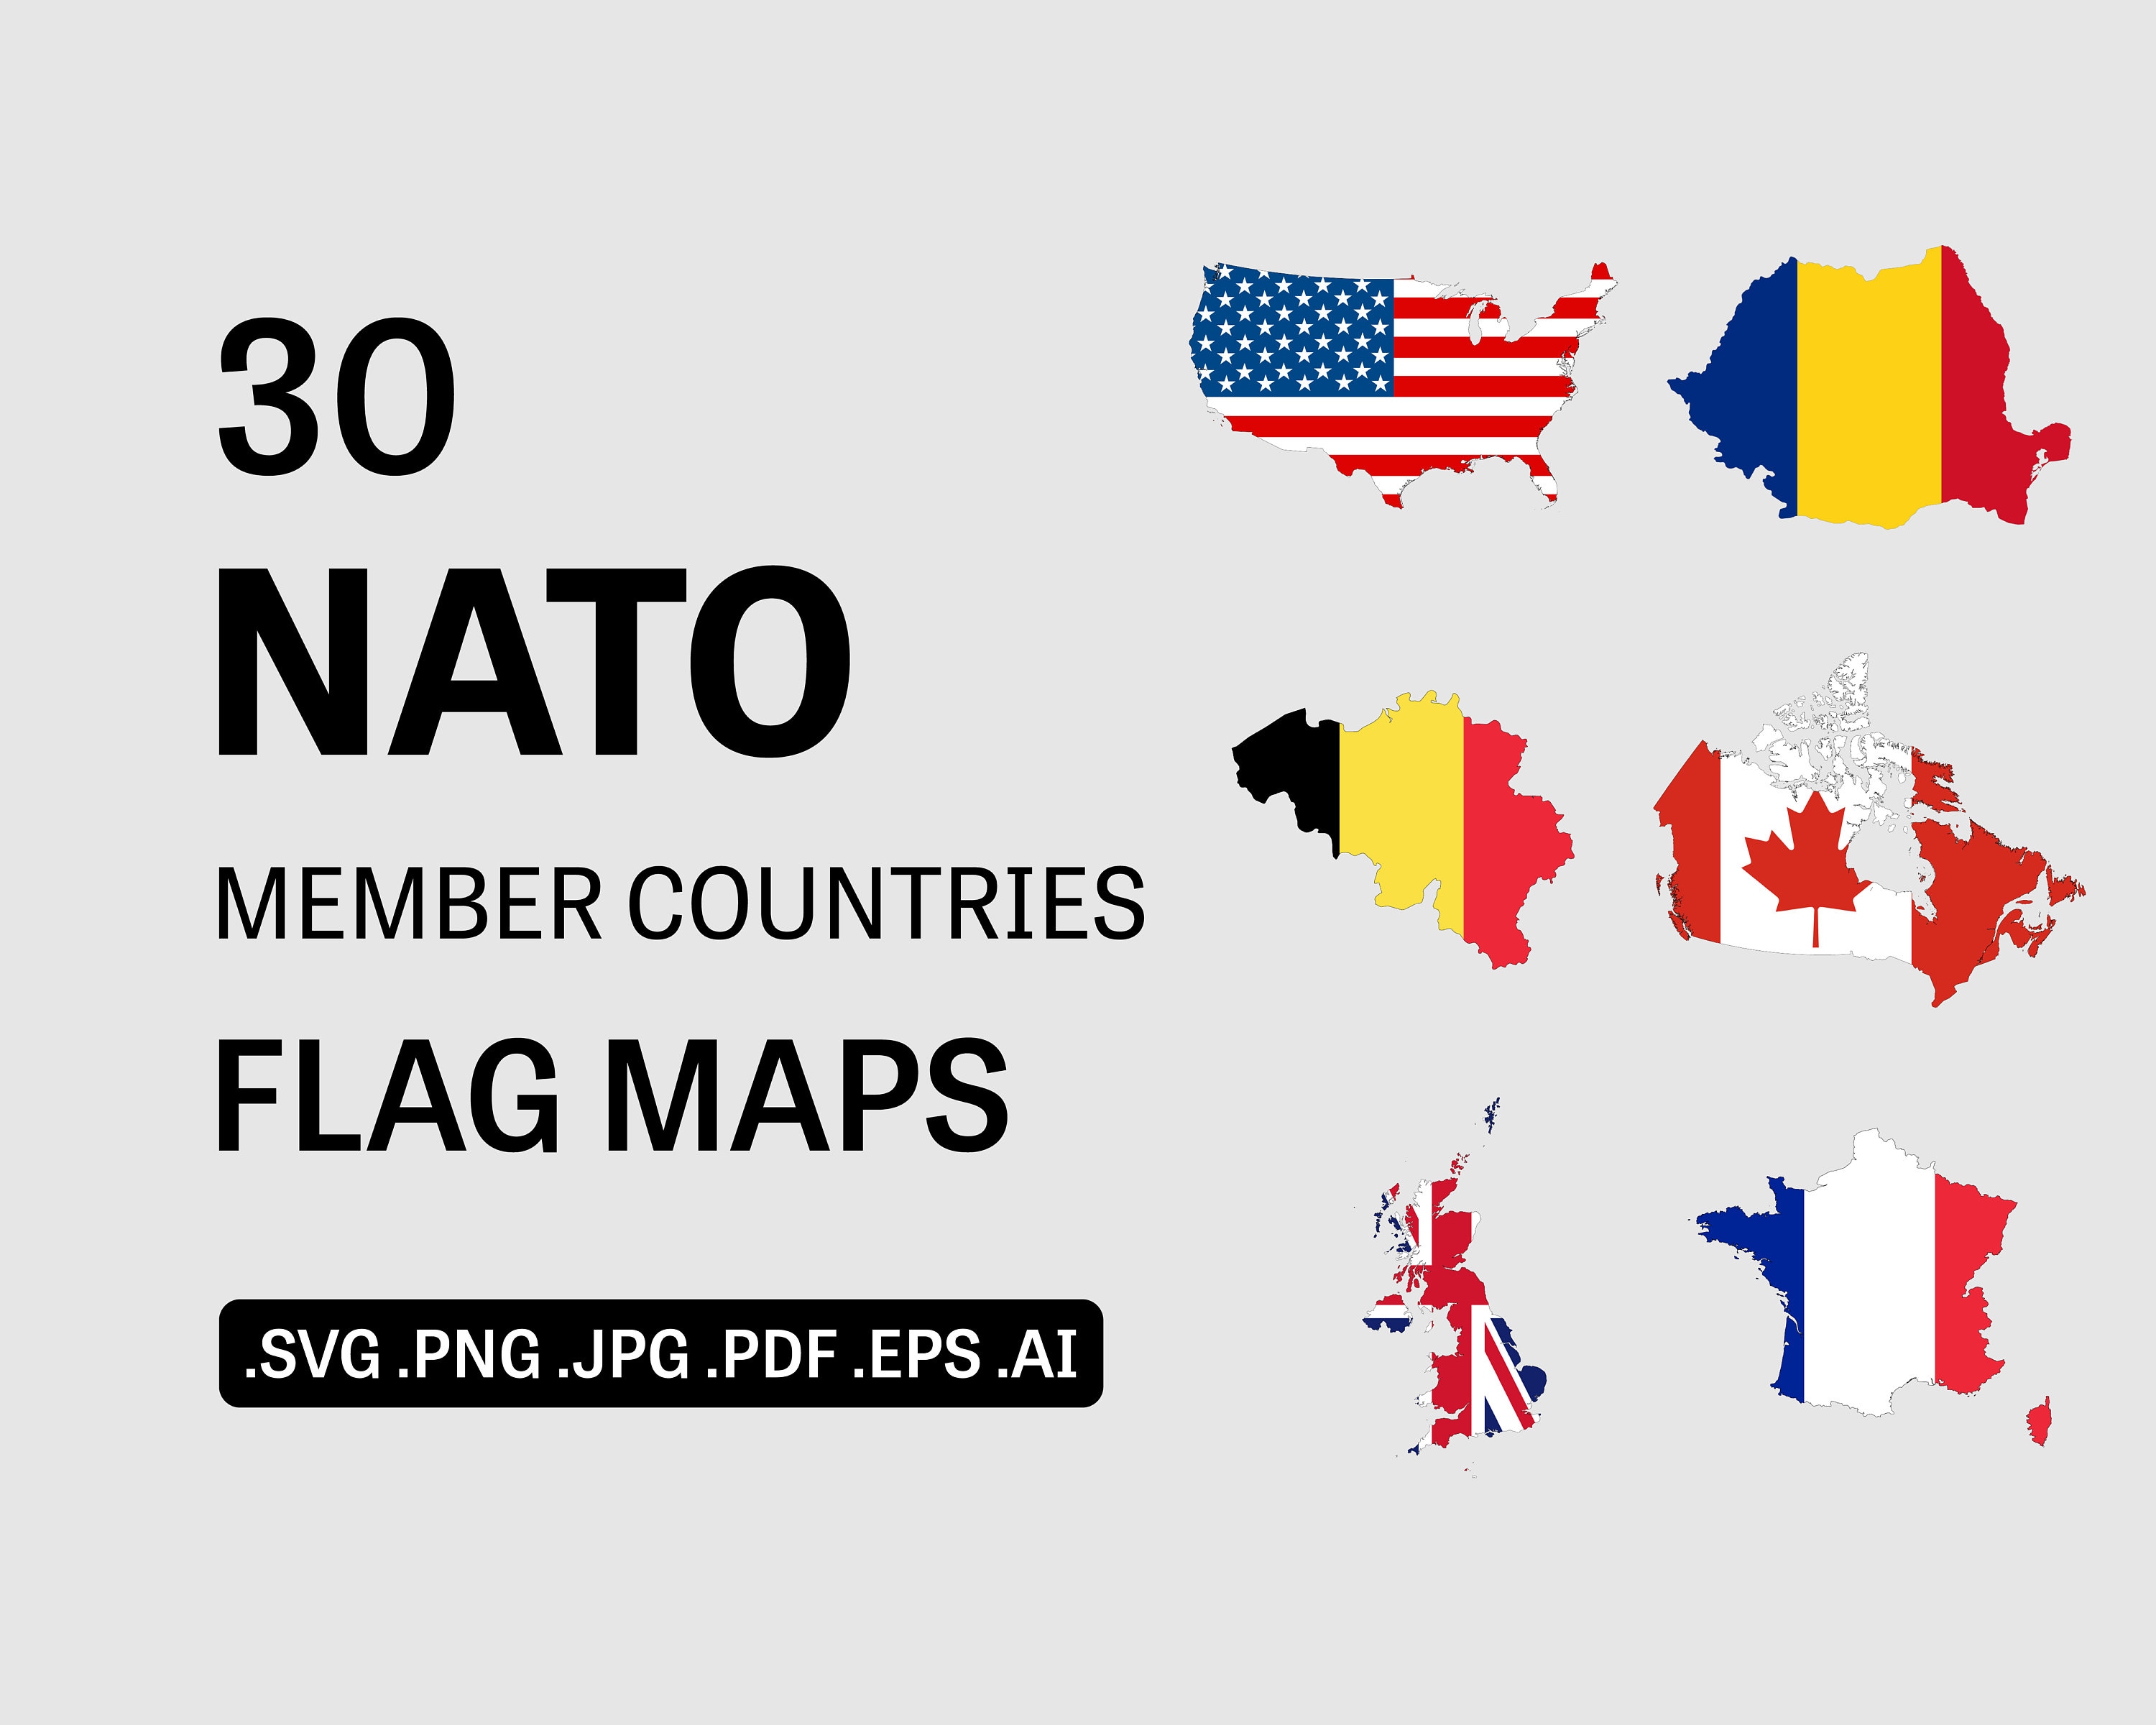 Mapas de todos os países: Quiz – Apps no Google Play